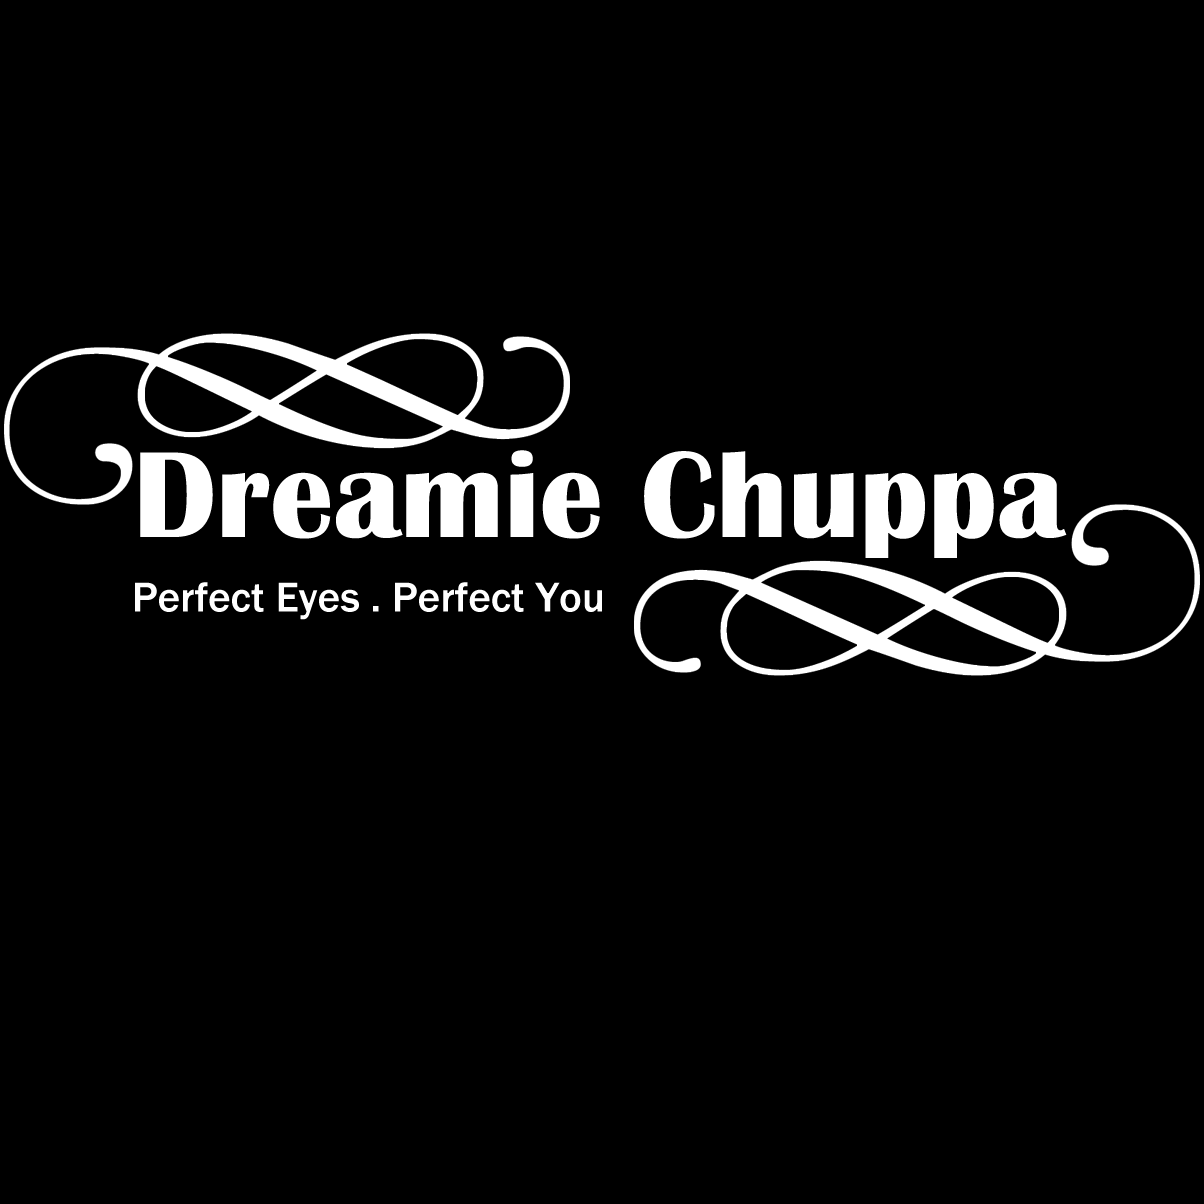 https://www.facebook.com/dreamie.chuppa